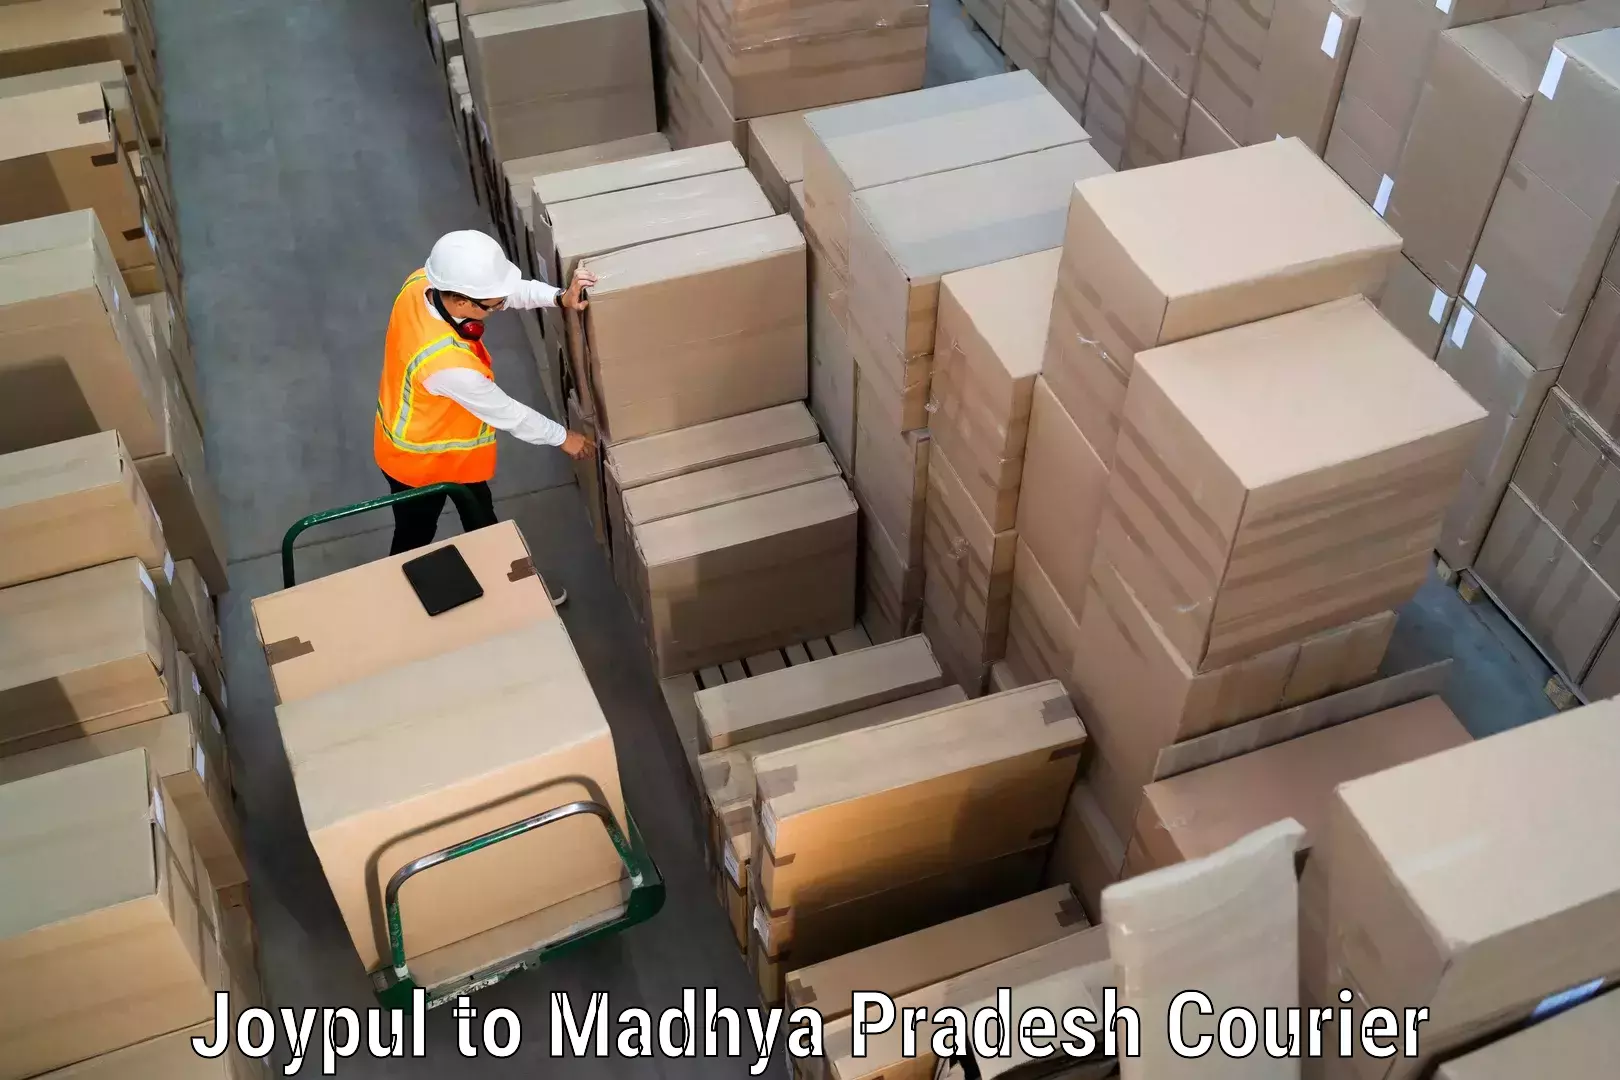 Quick dispatch service Joypul to Madhya Pradesh